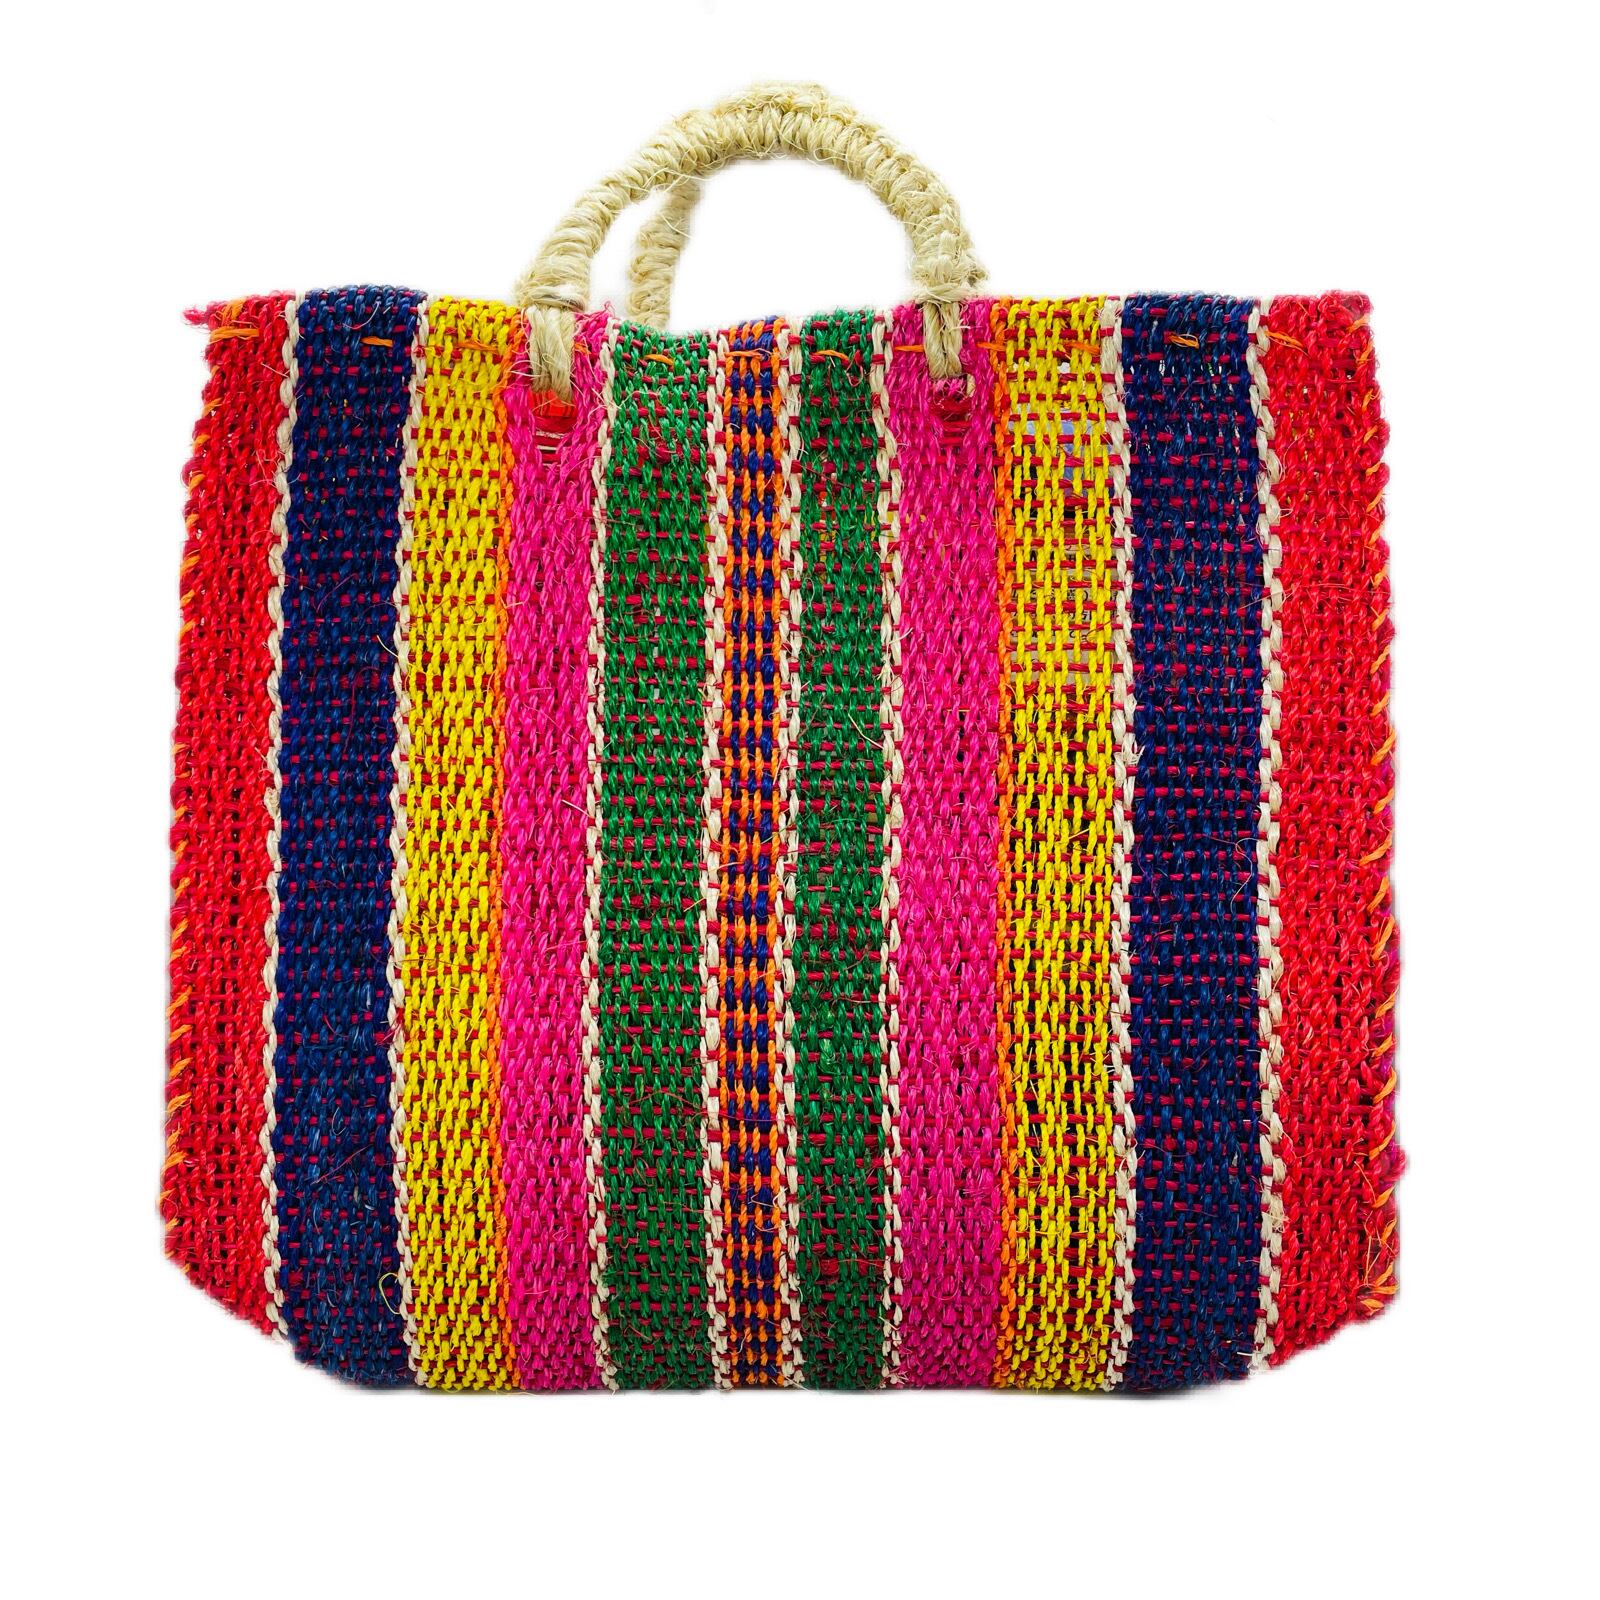 MEXICAN MORRAL BAG Mayan woven agave maguey ixtle natural fiber bag  shoulder bag $38.00 - PicClick